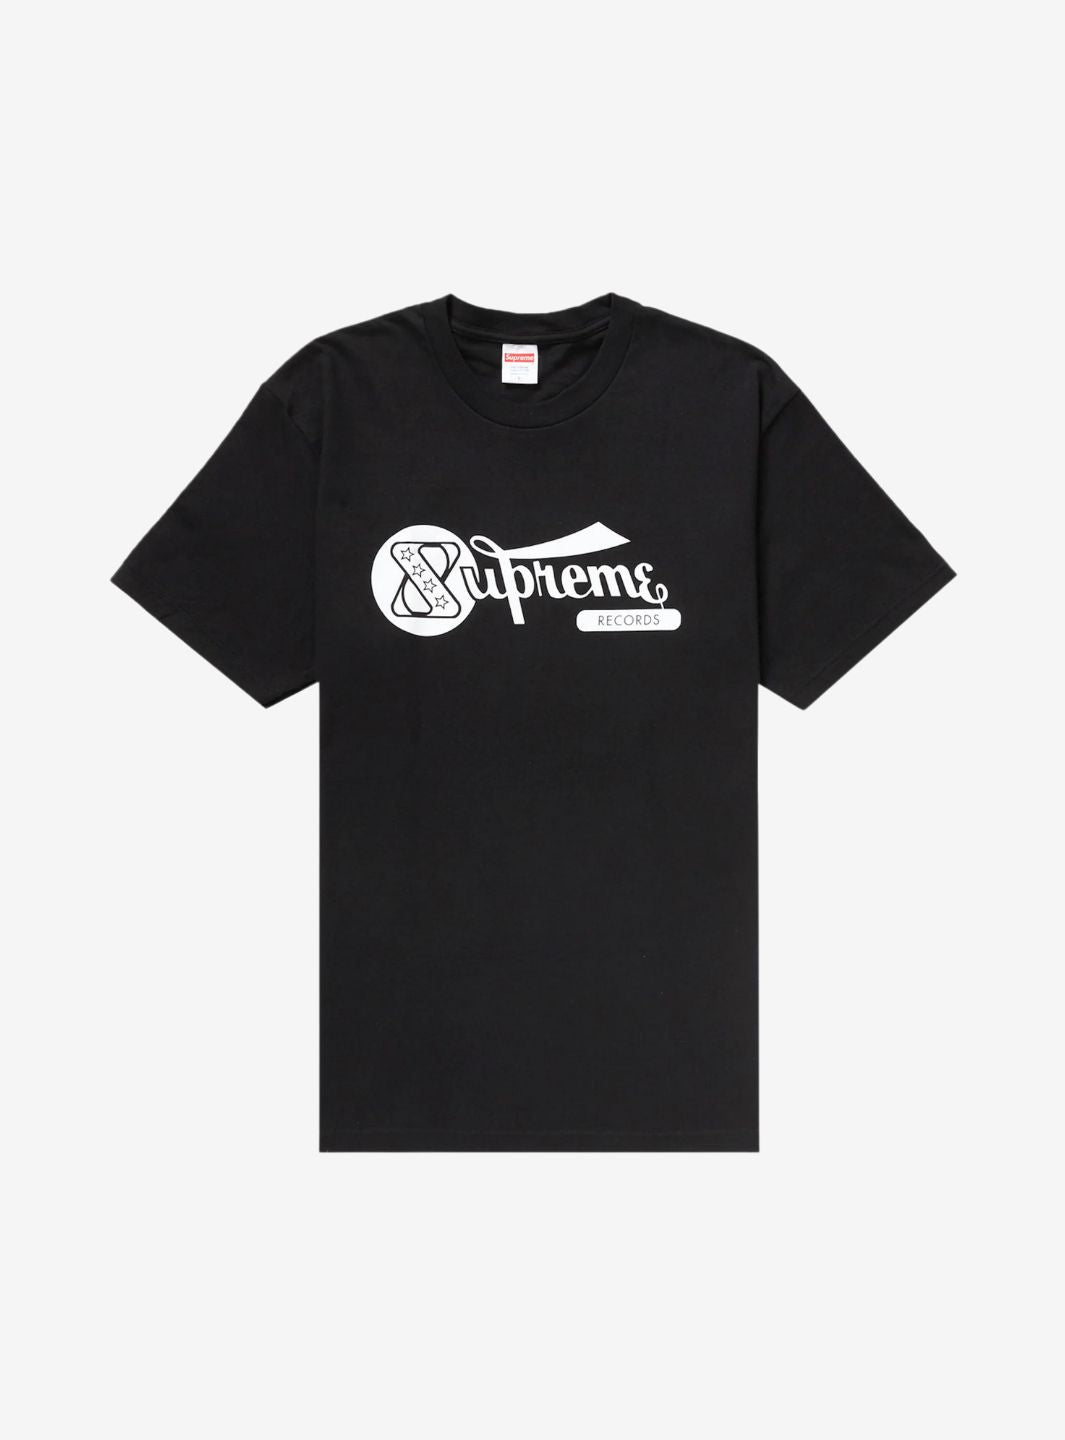 Supreme Records T-Shirt Black | ResellZone